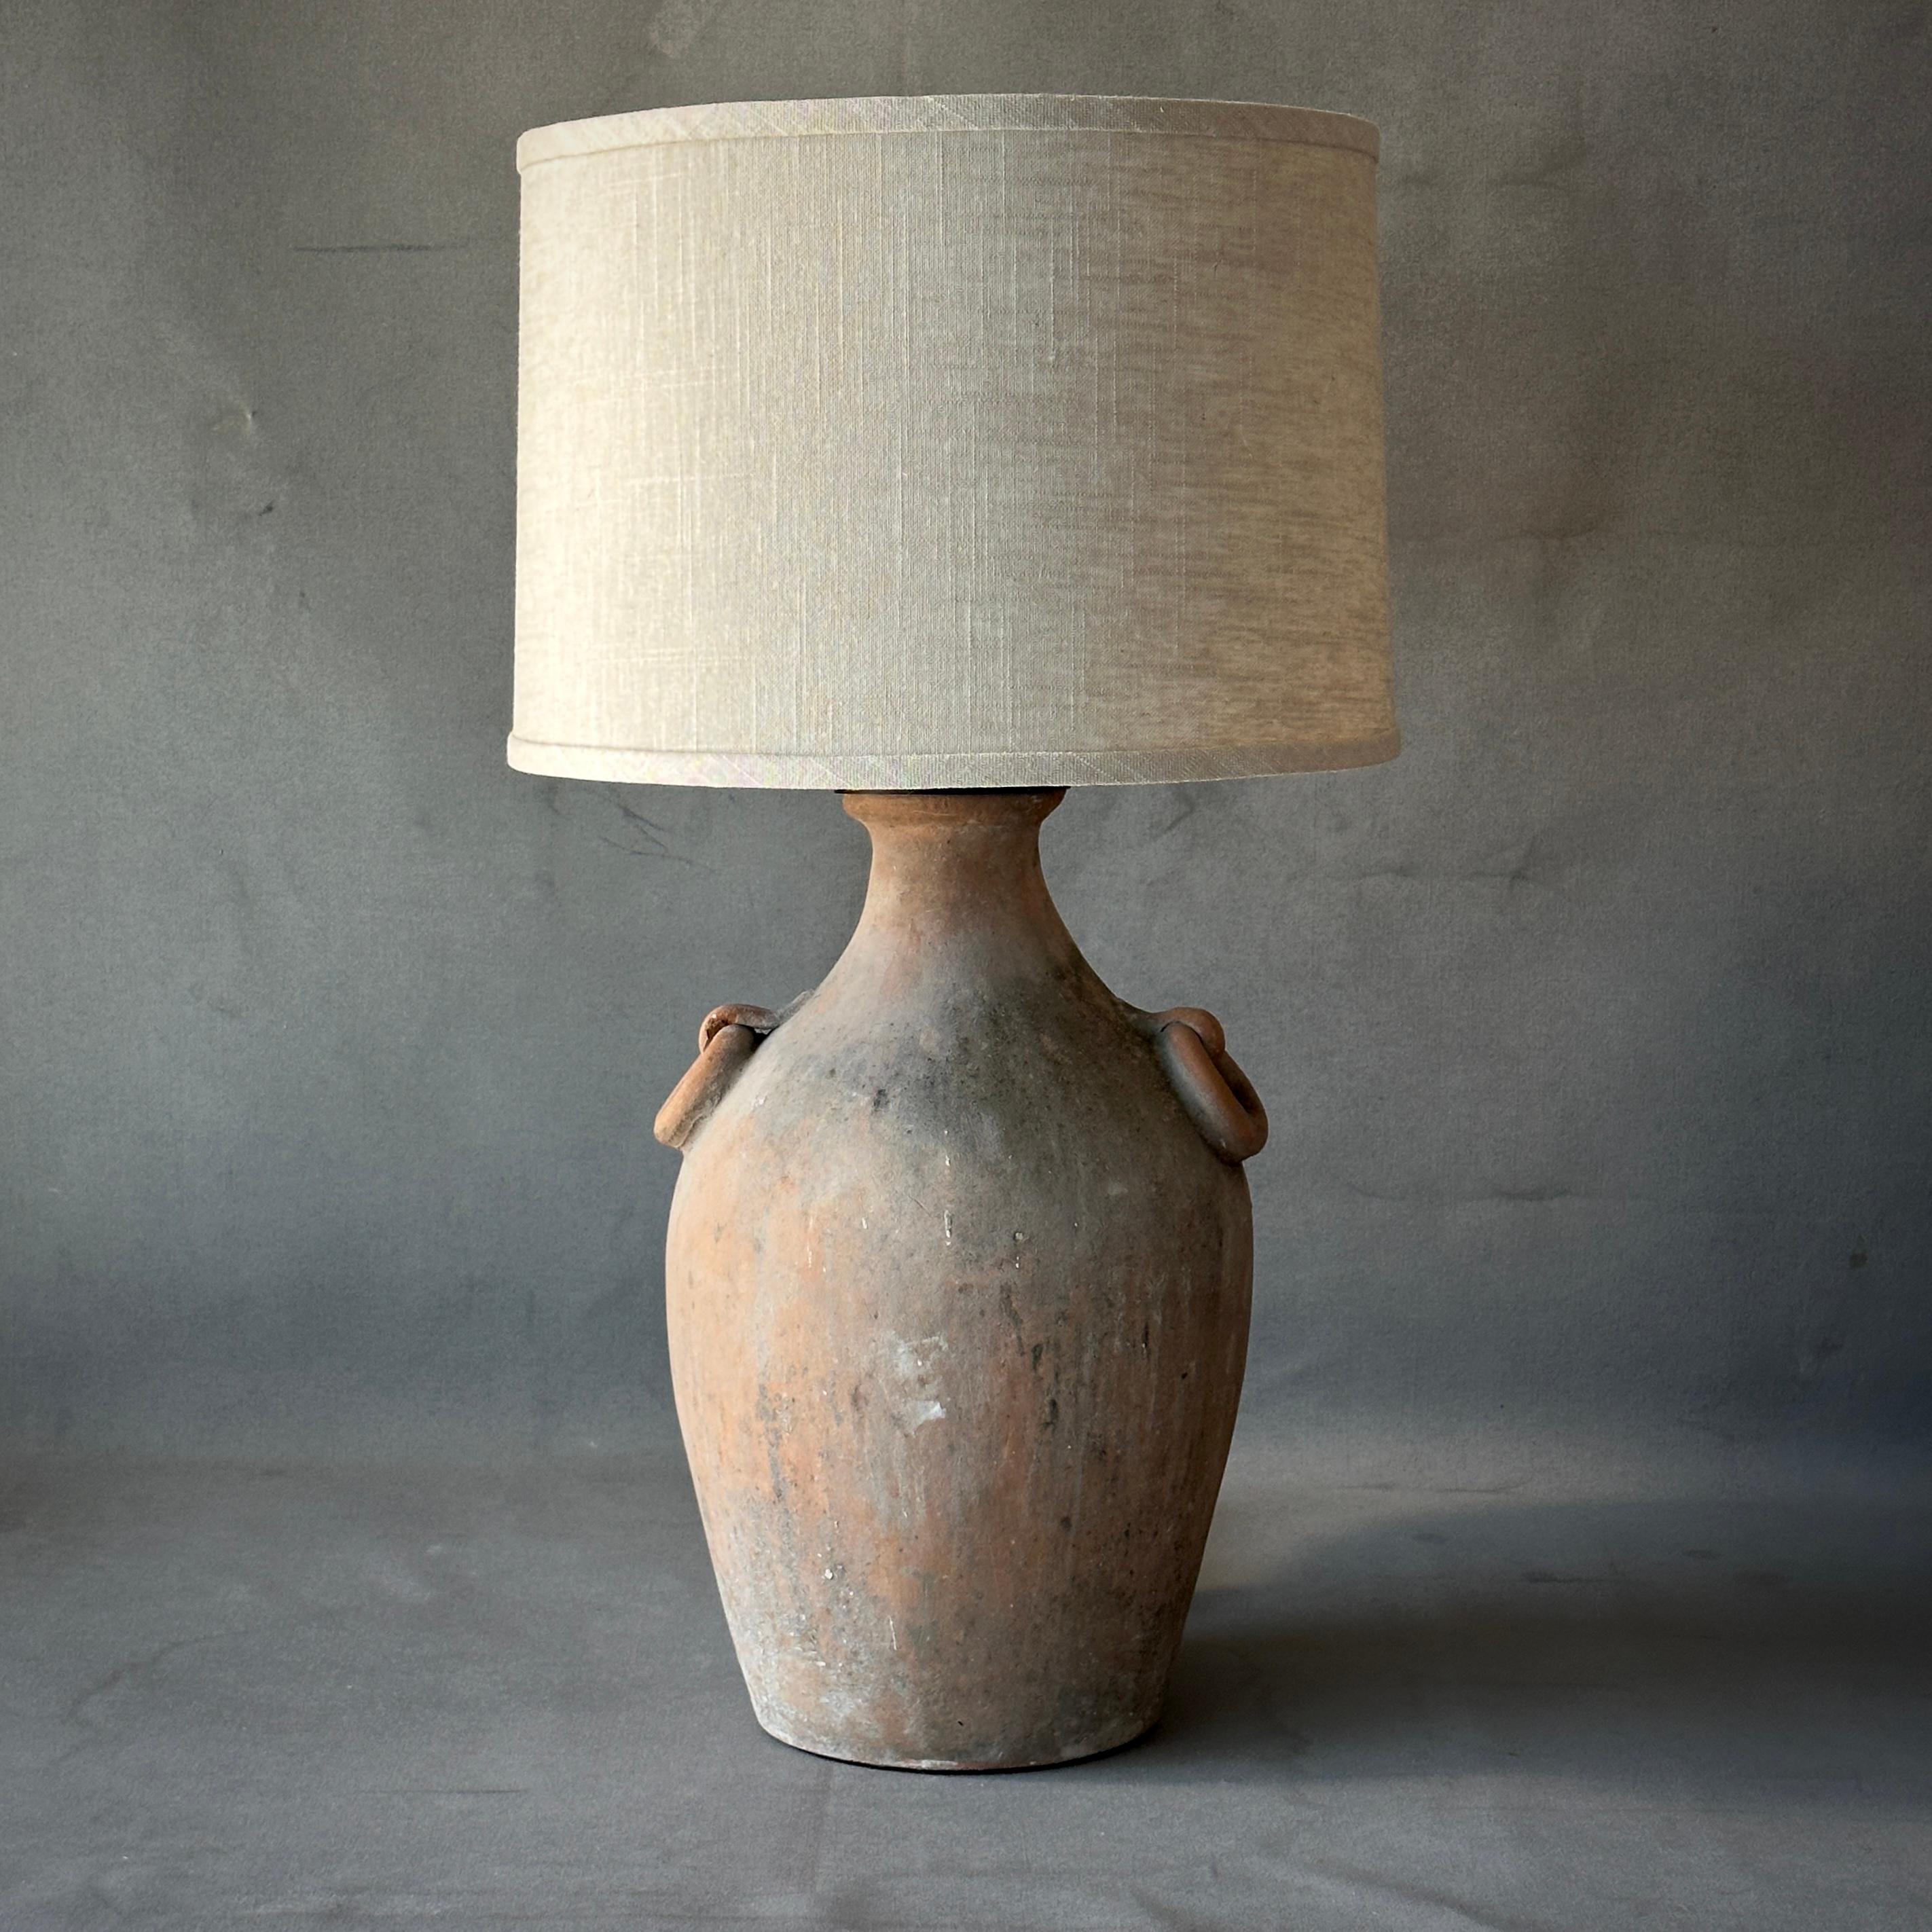 Decorative Terracotta Vessel as Lamp